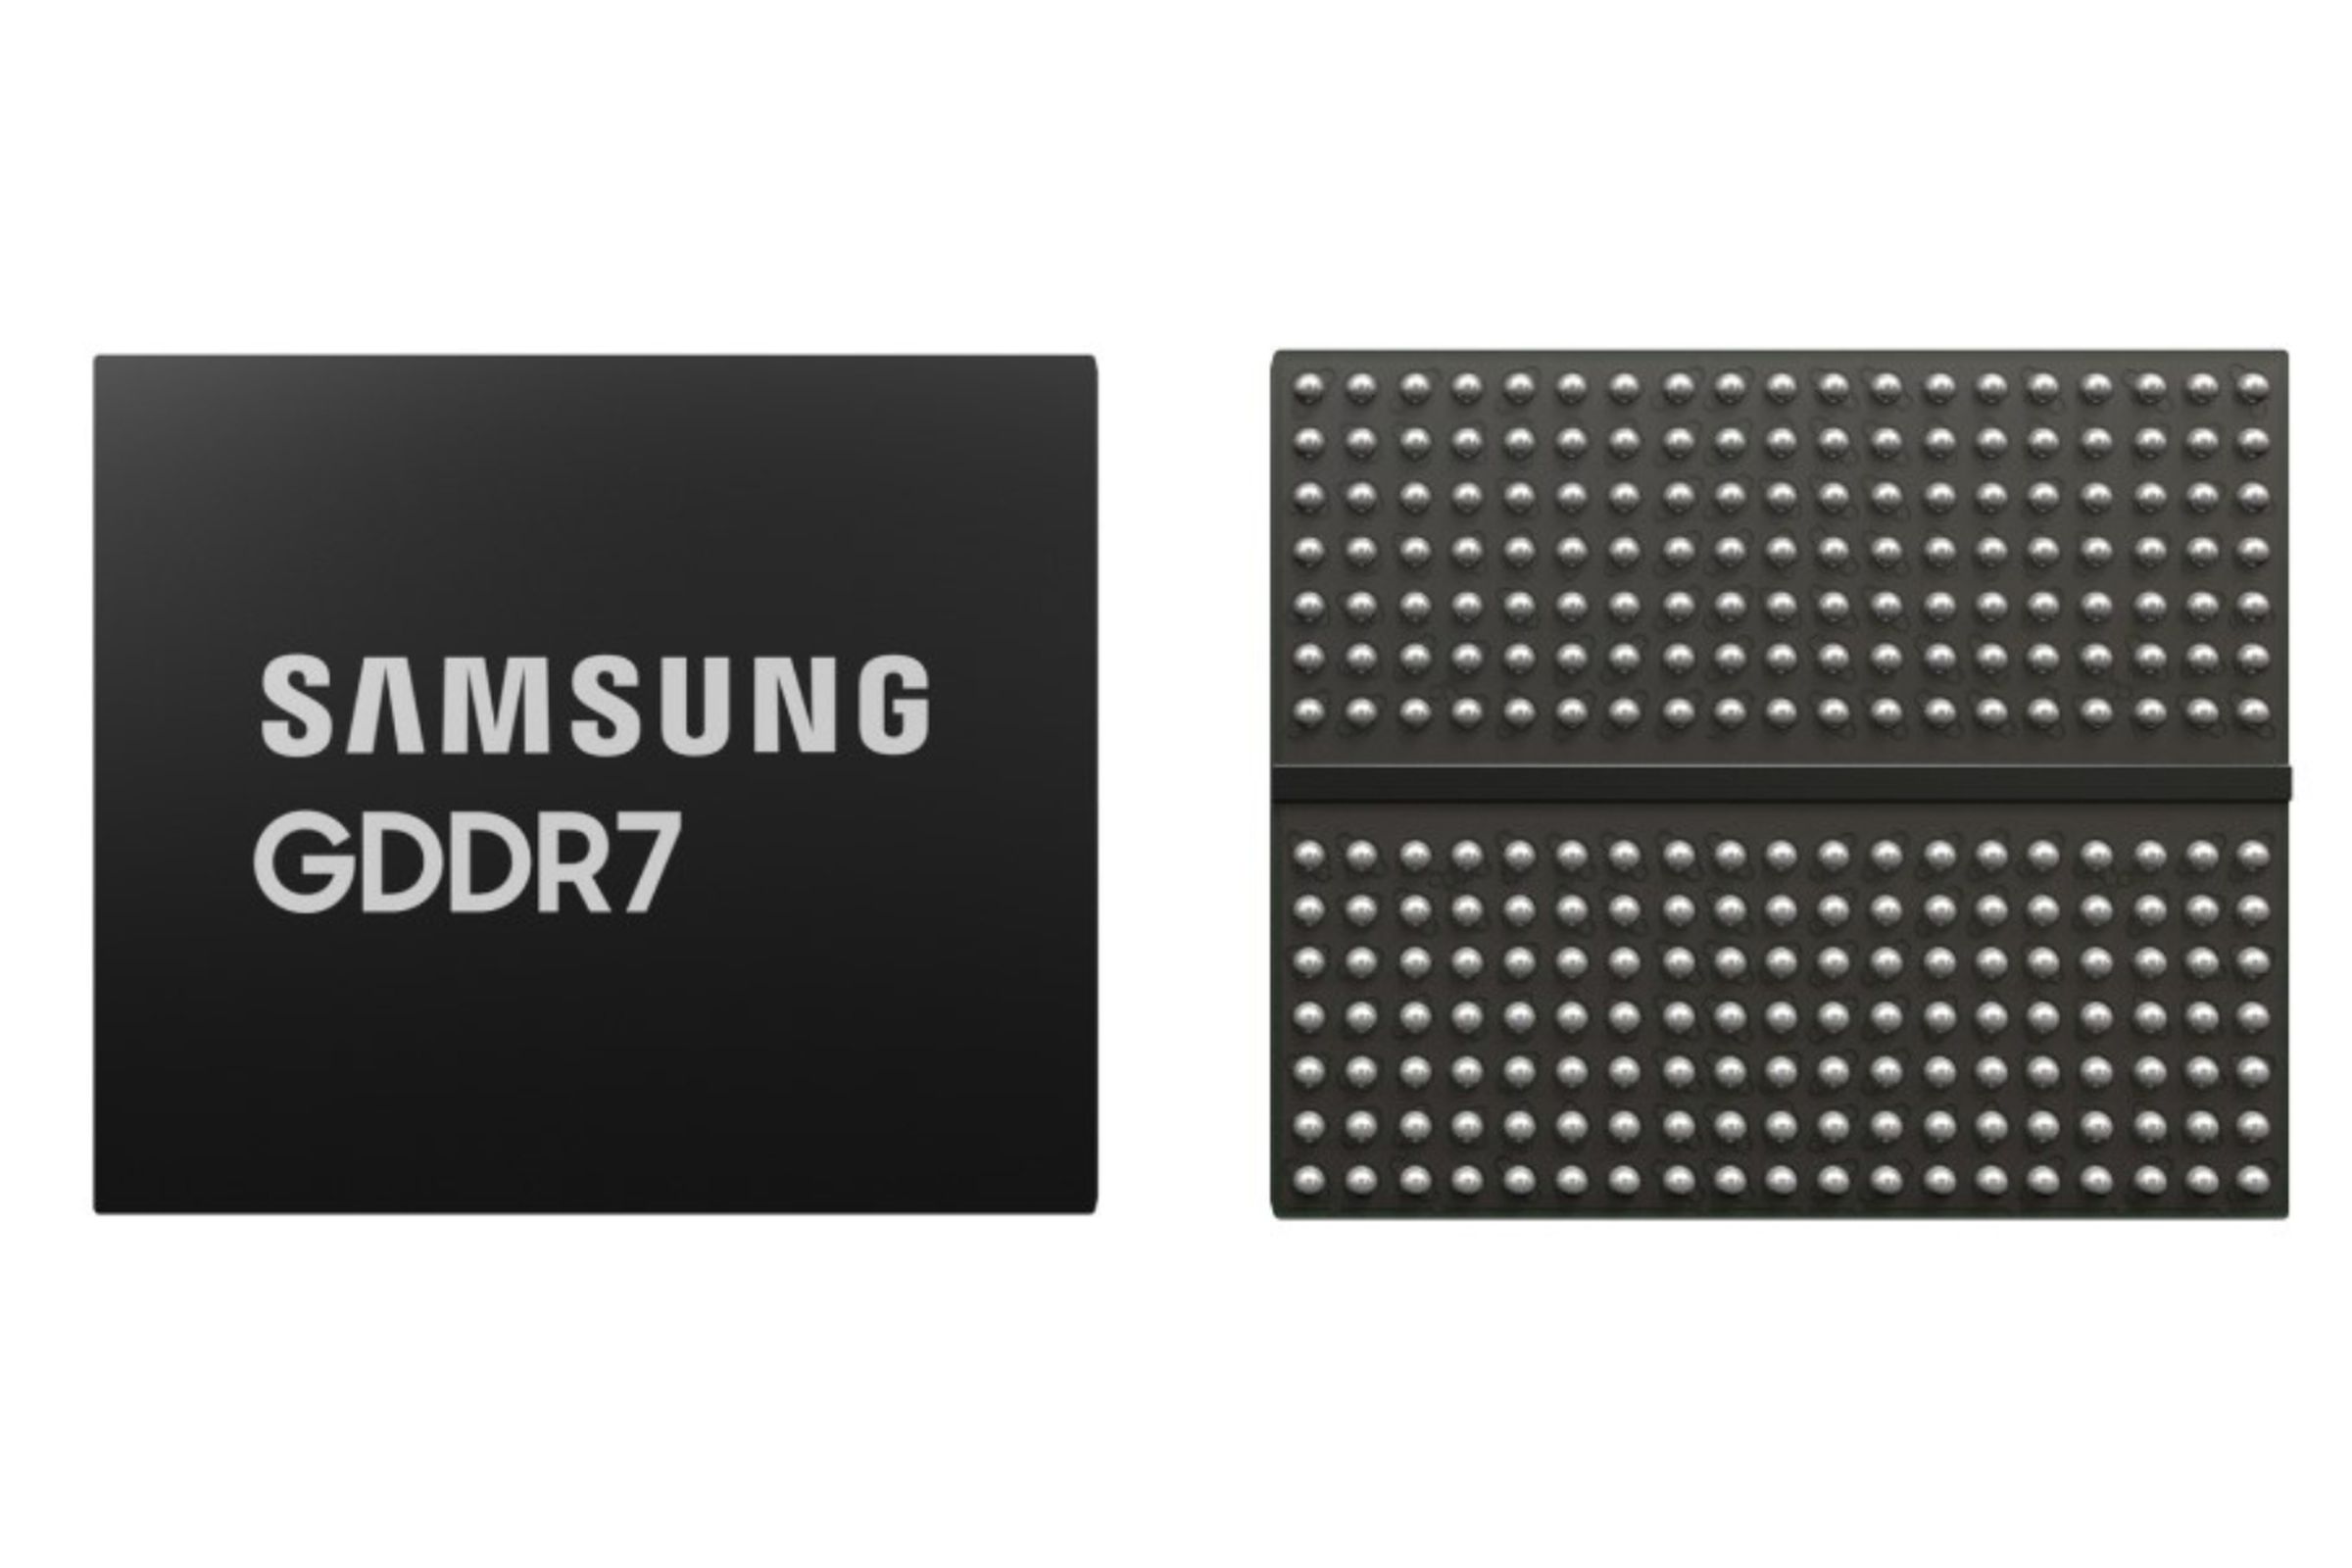 Samsung’s GDDR7 memory chips.